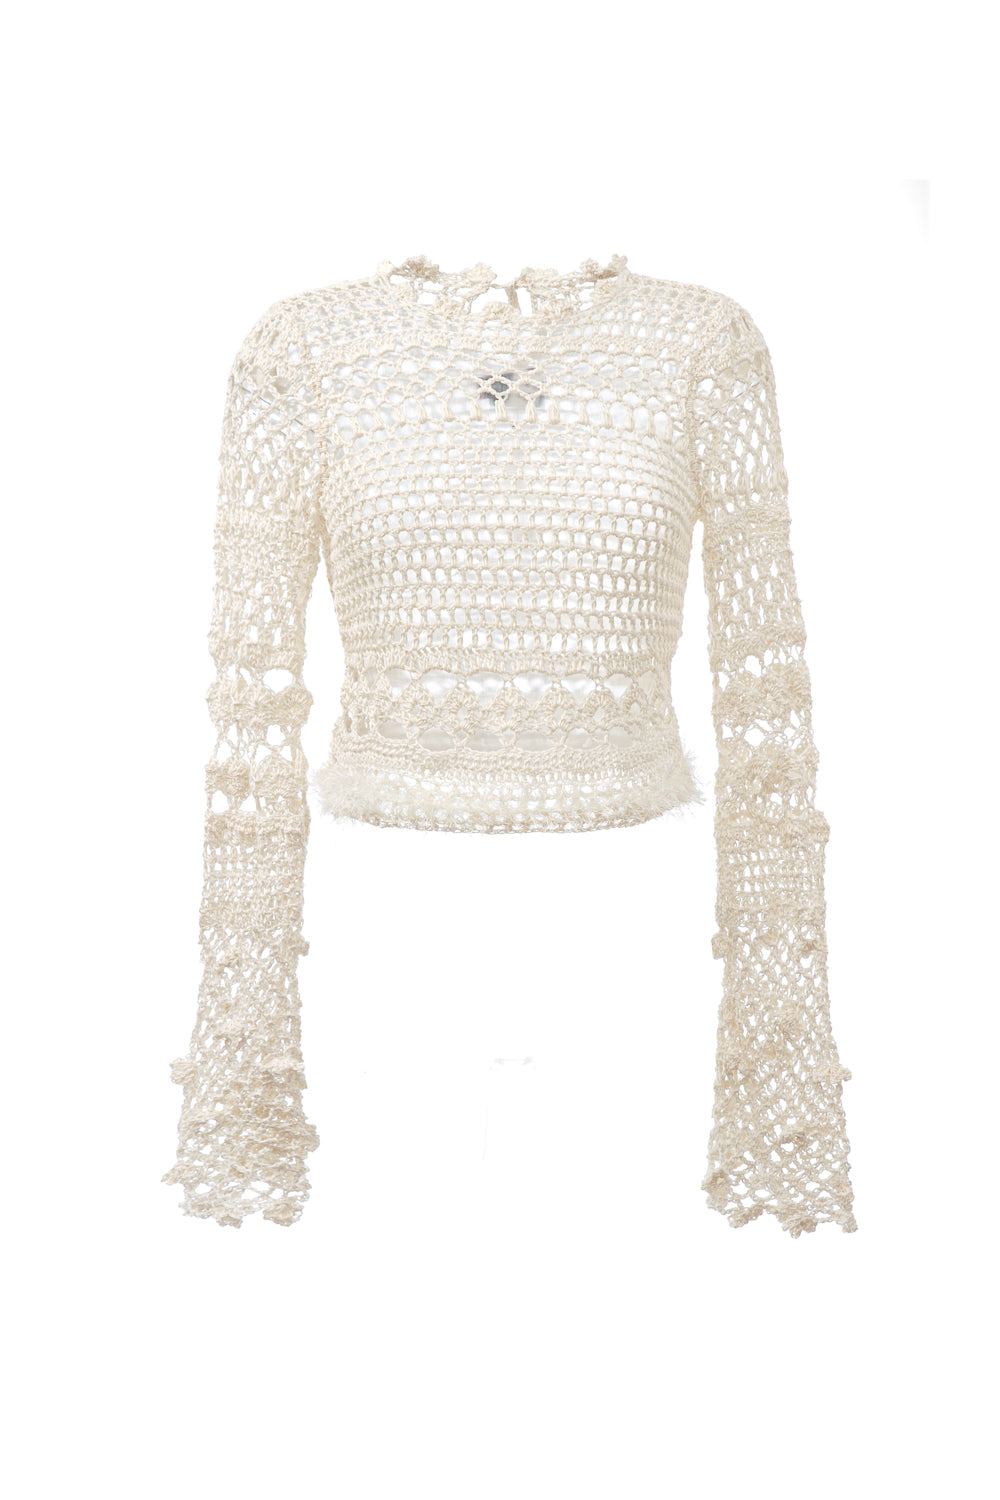 Shop Andreeva Women's Malva White Handmade Crochet Top